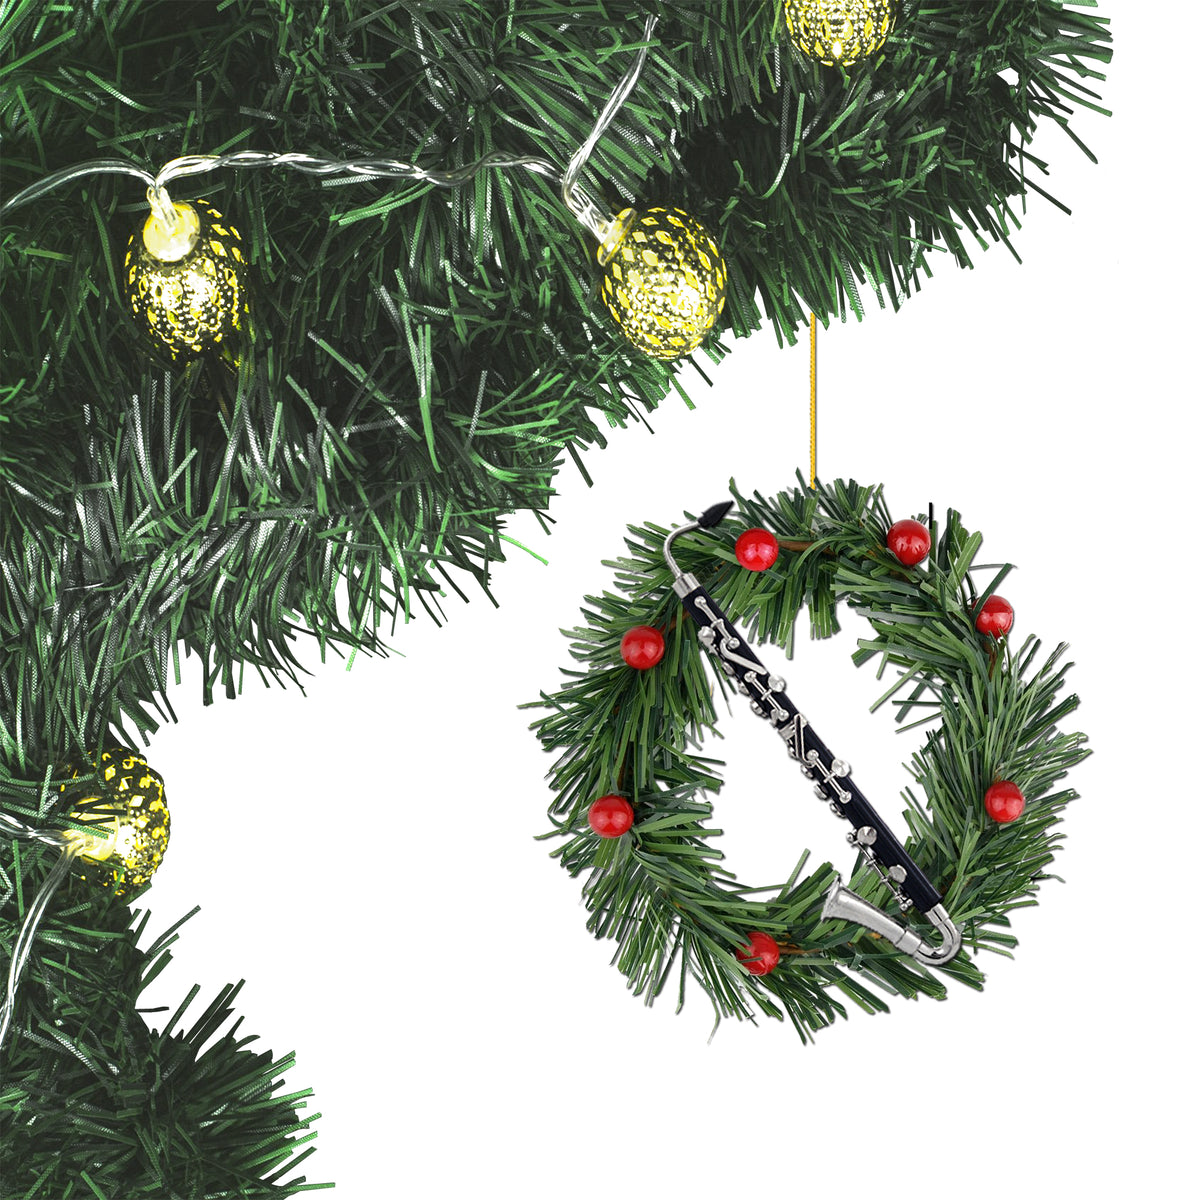 Bass Clarinet Ornament - The Christmas Loft